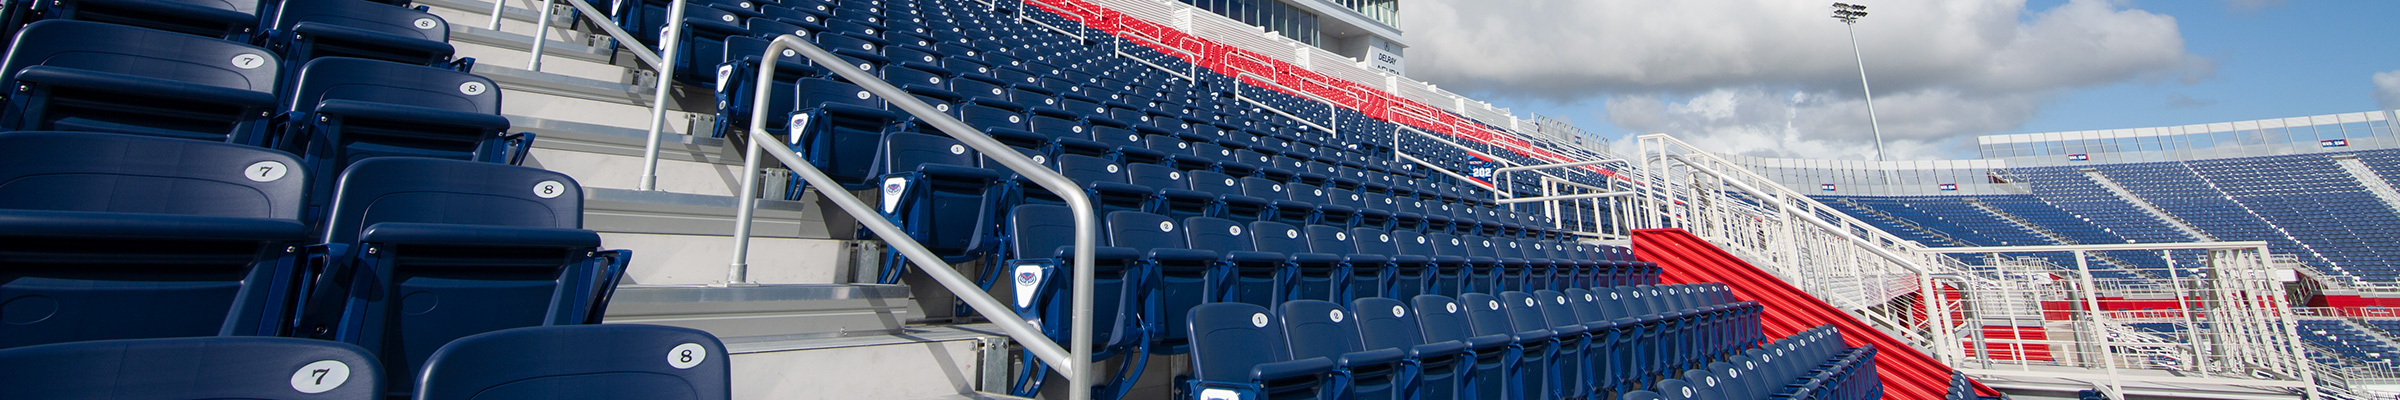 FAU Stadium Fusion chairs